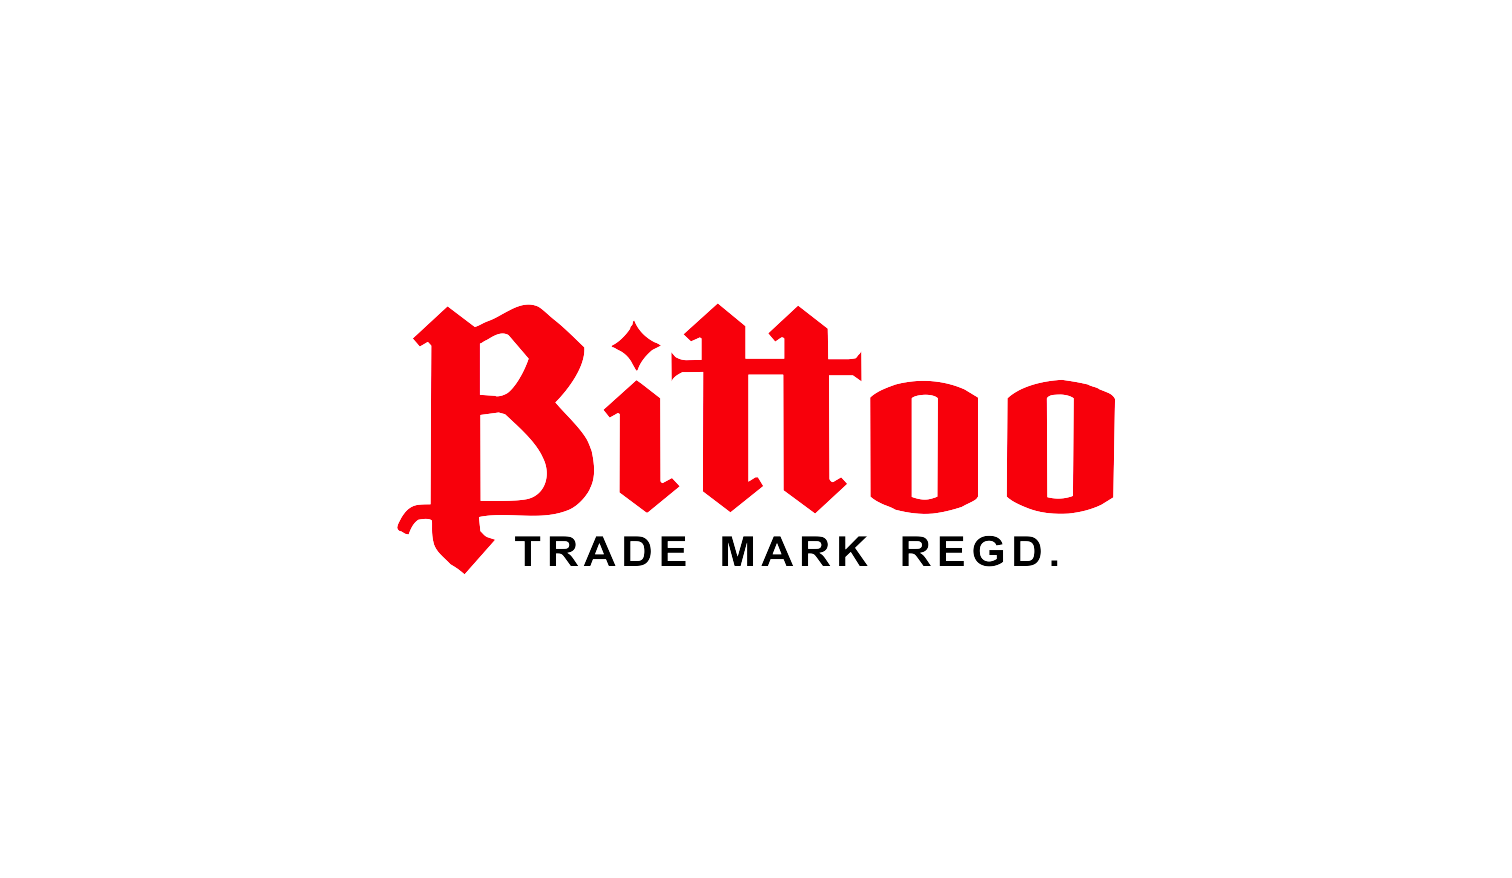 Bittoo Logo